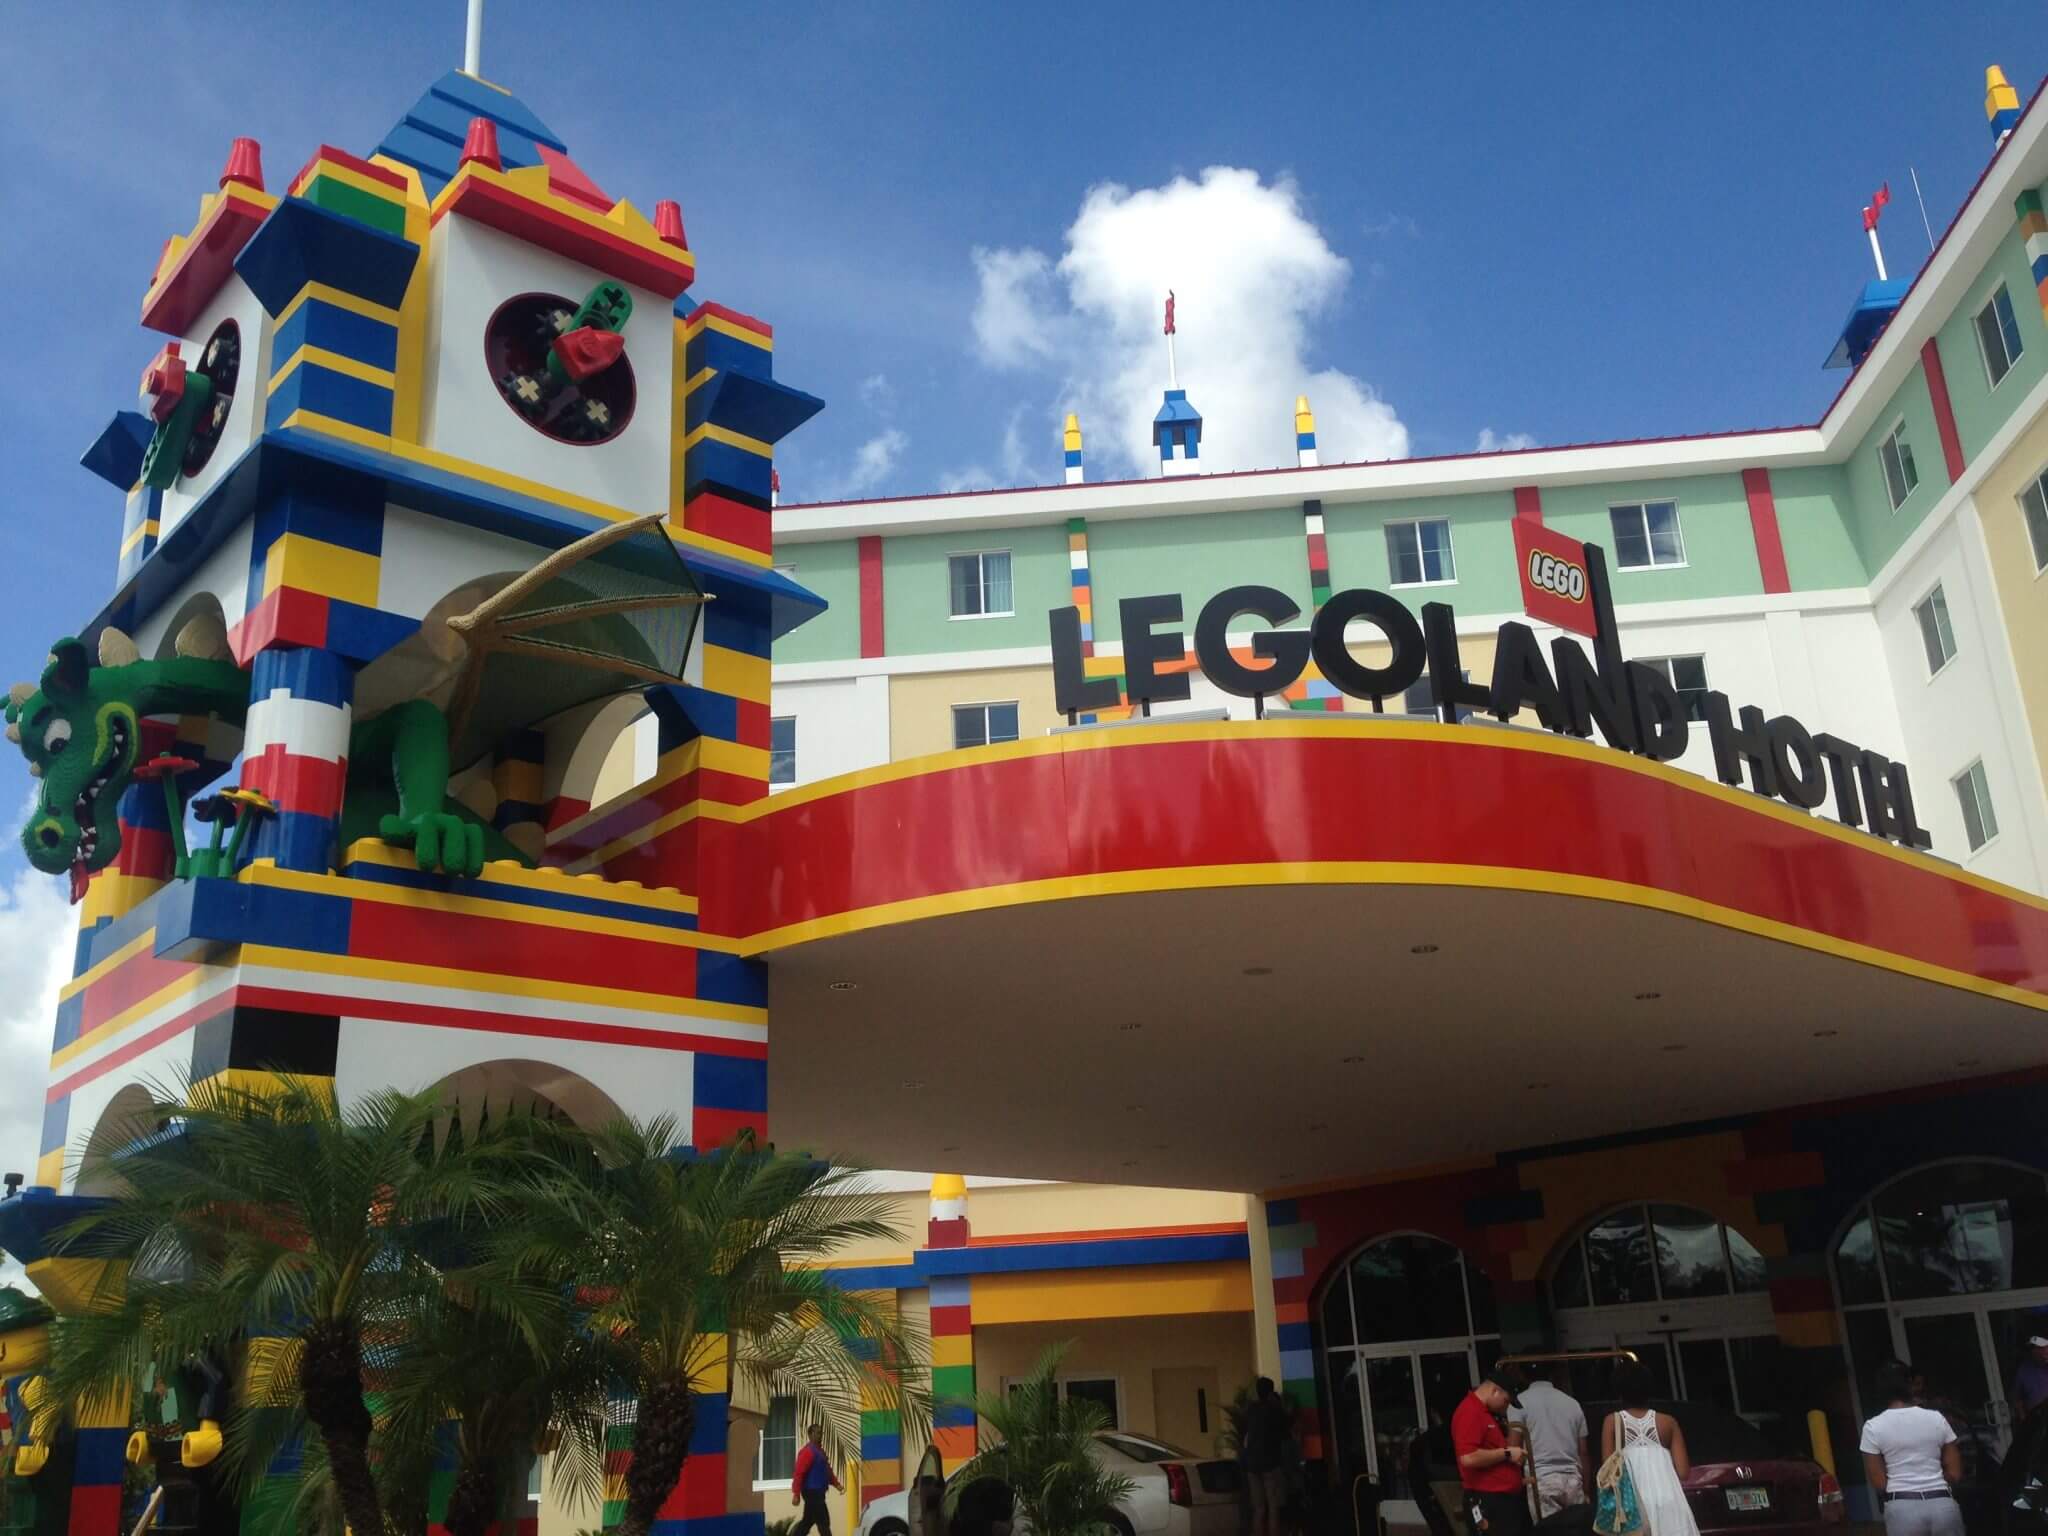 The Legoland Hotel in Florida.